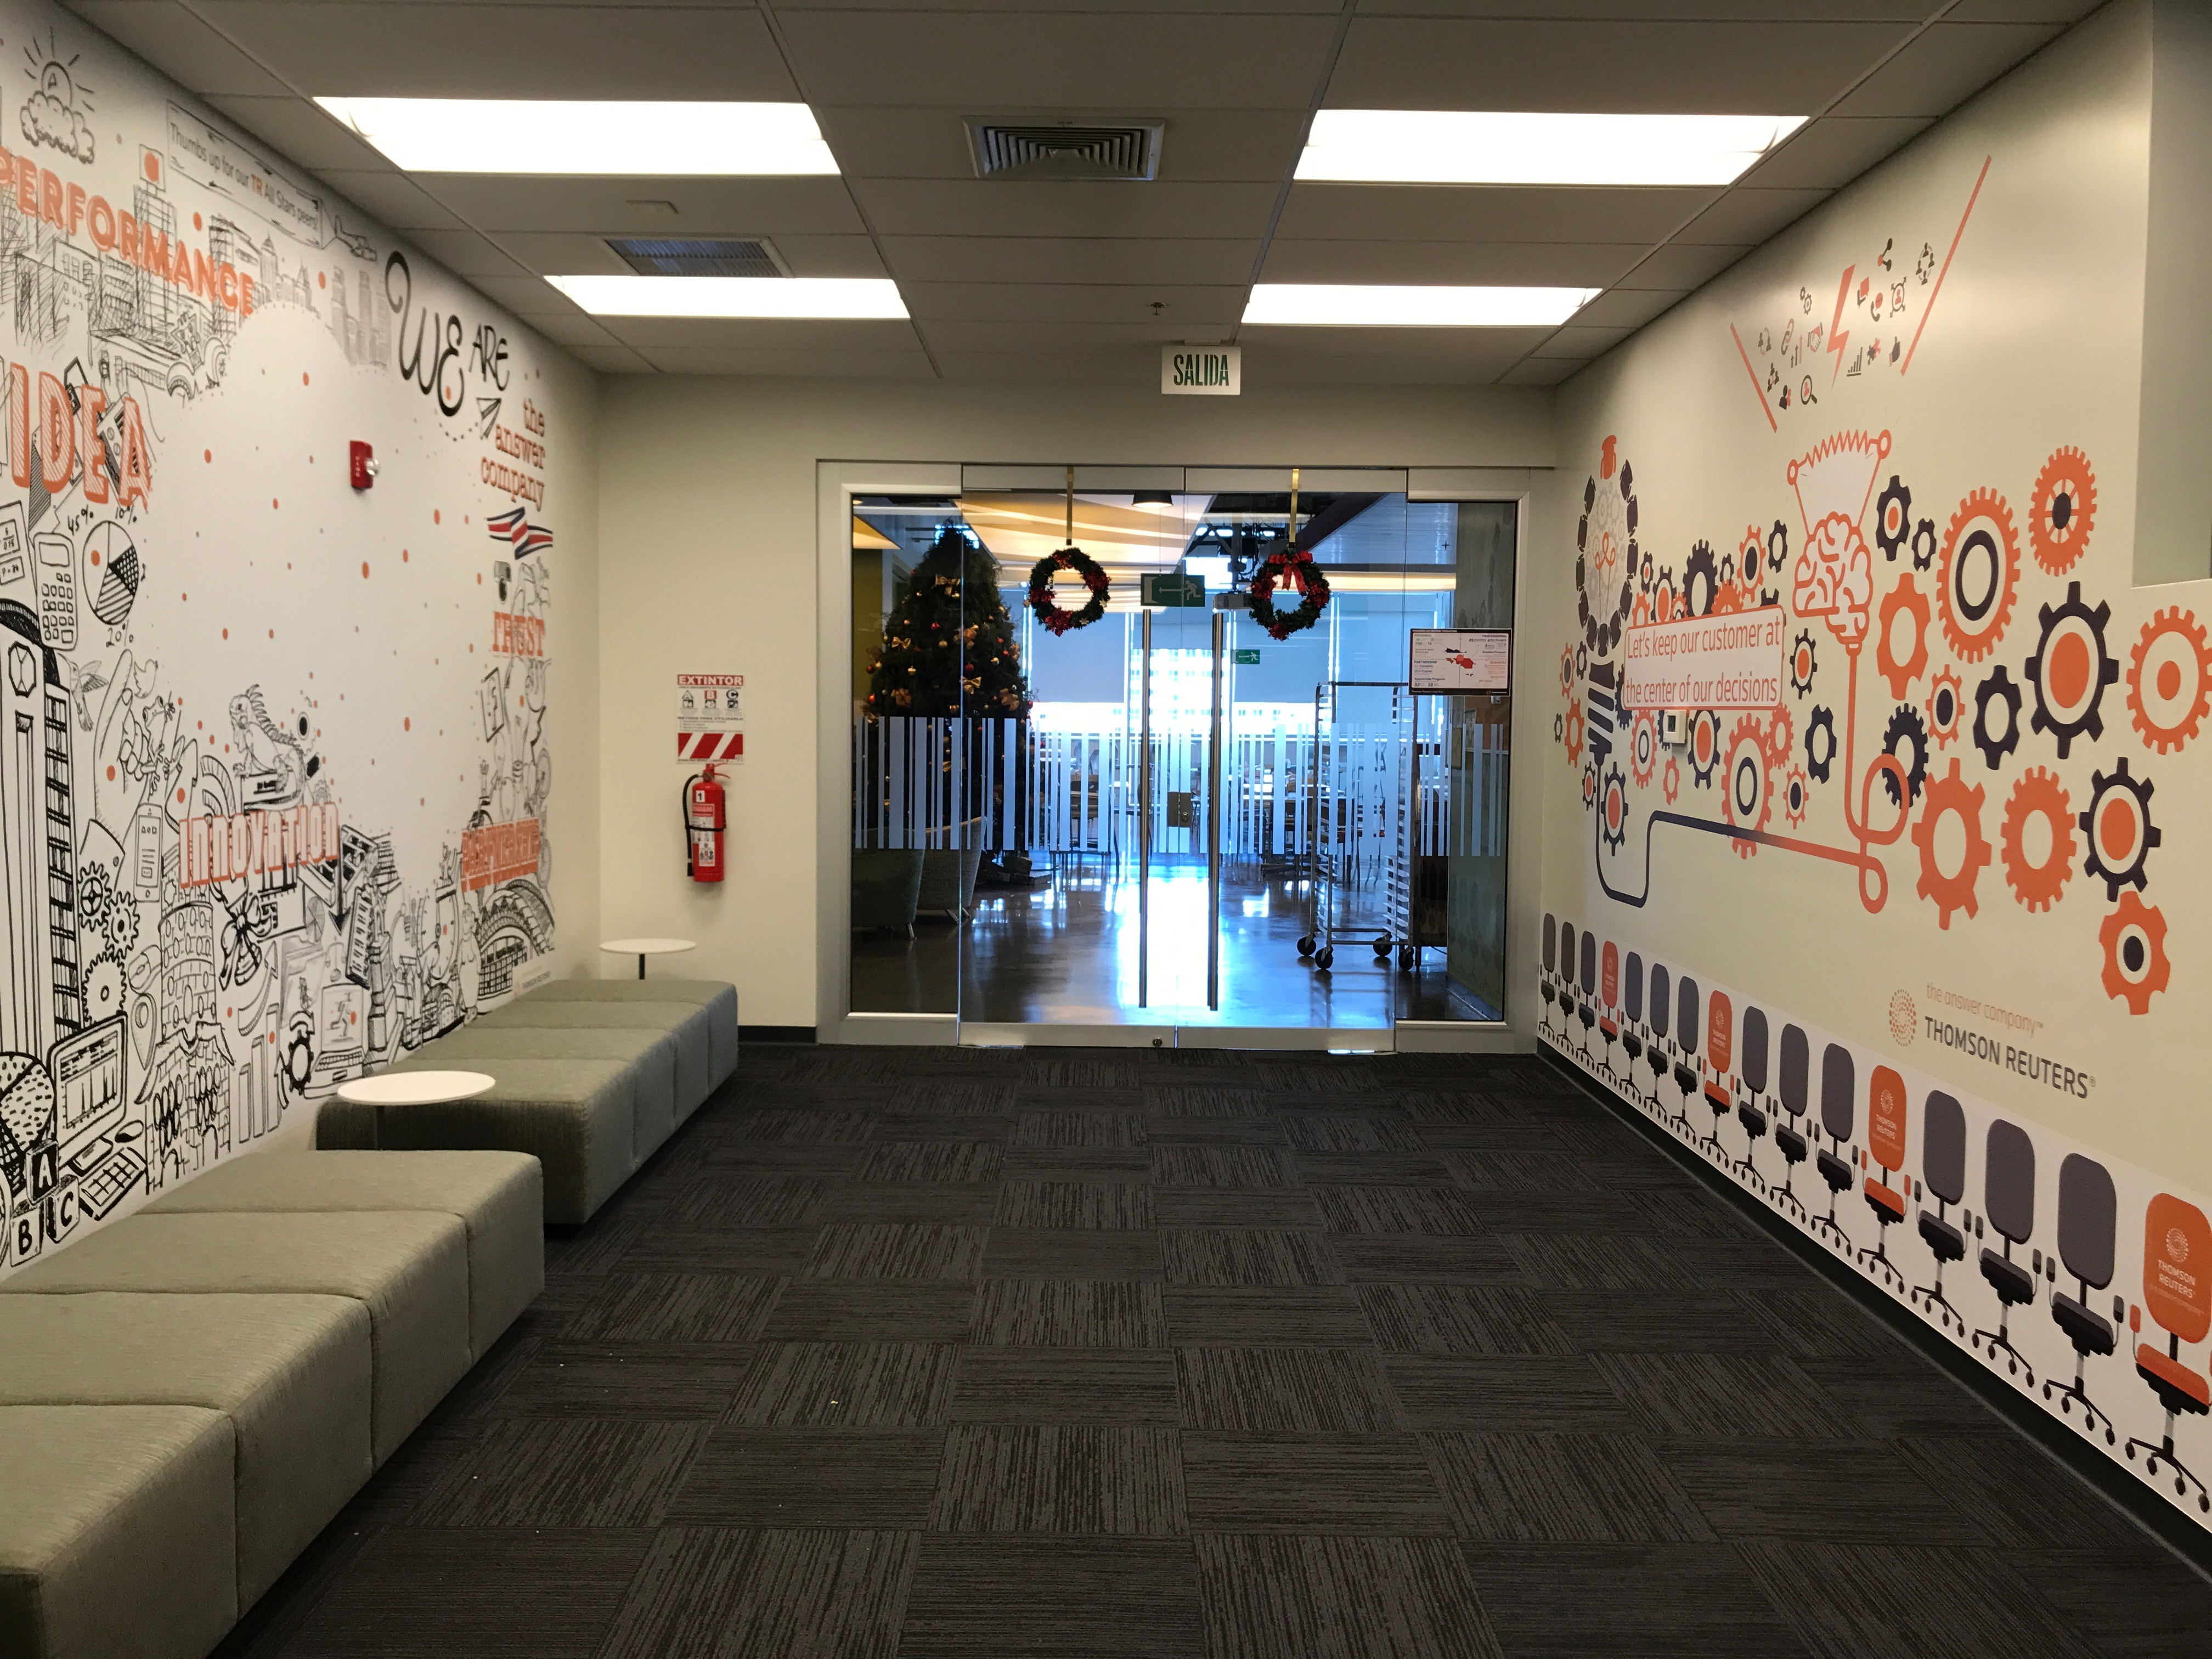 Thomson Reuters Costa Rica office interior decorative hallway